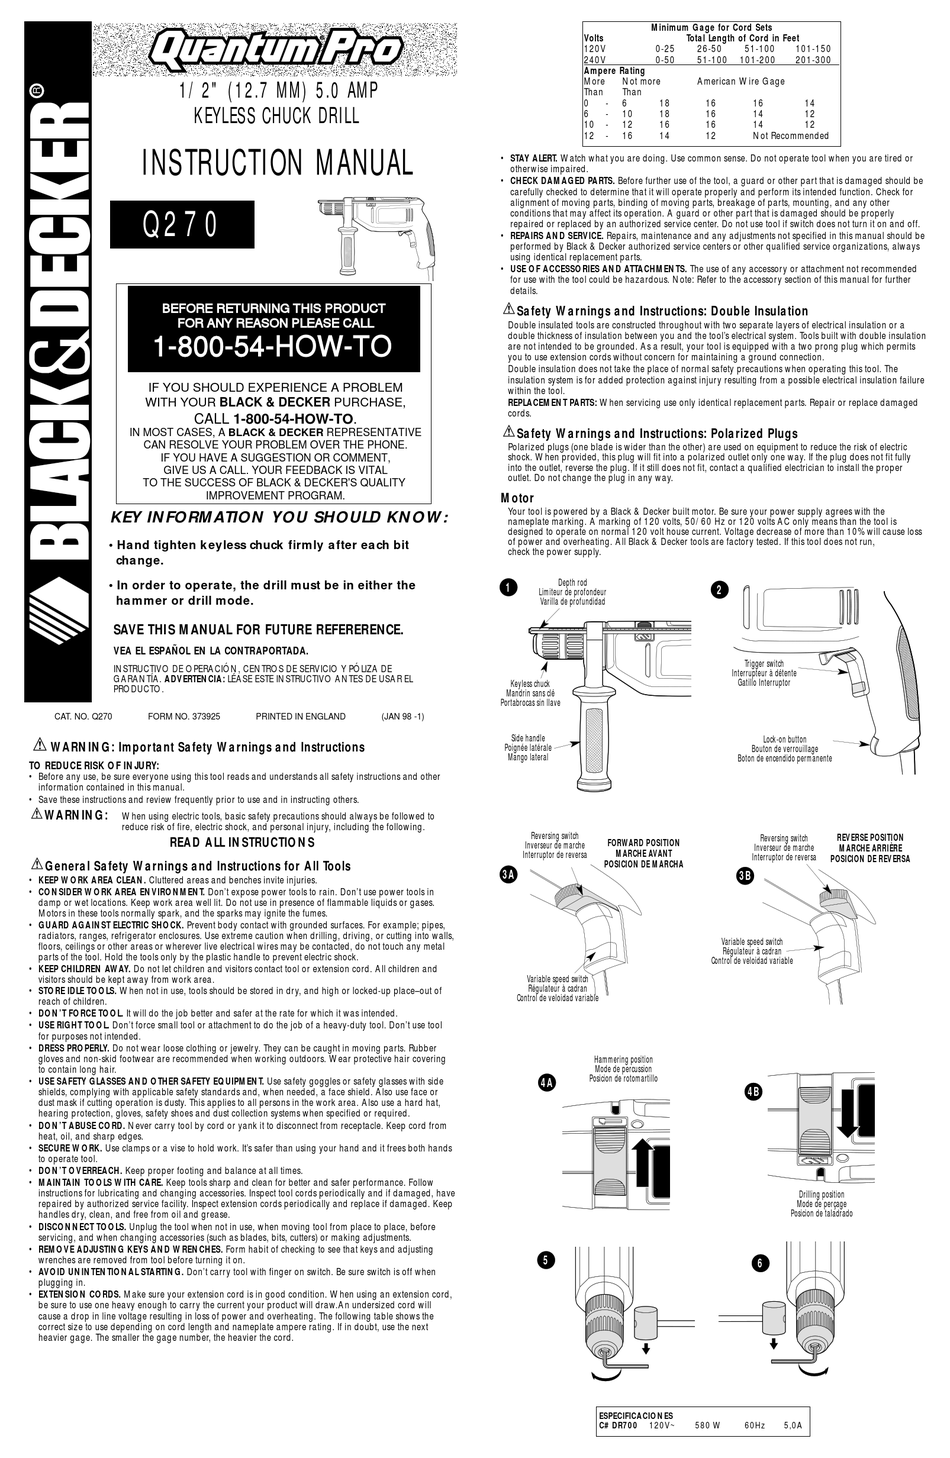 BLACK & DECKER GH700 INSTRUCTION MANUAL Pdf Download